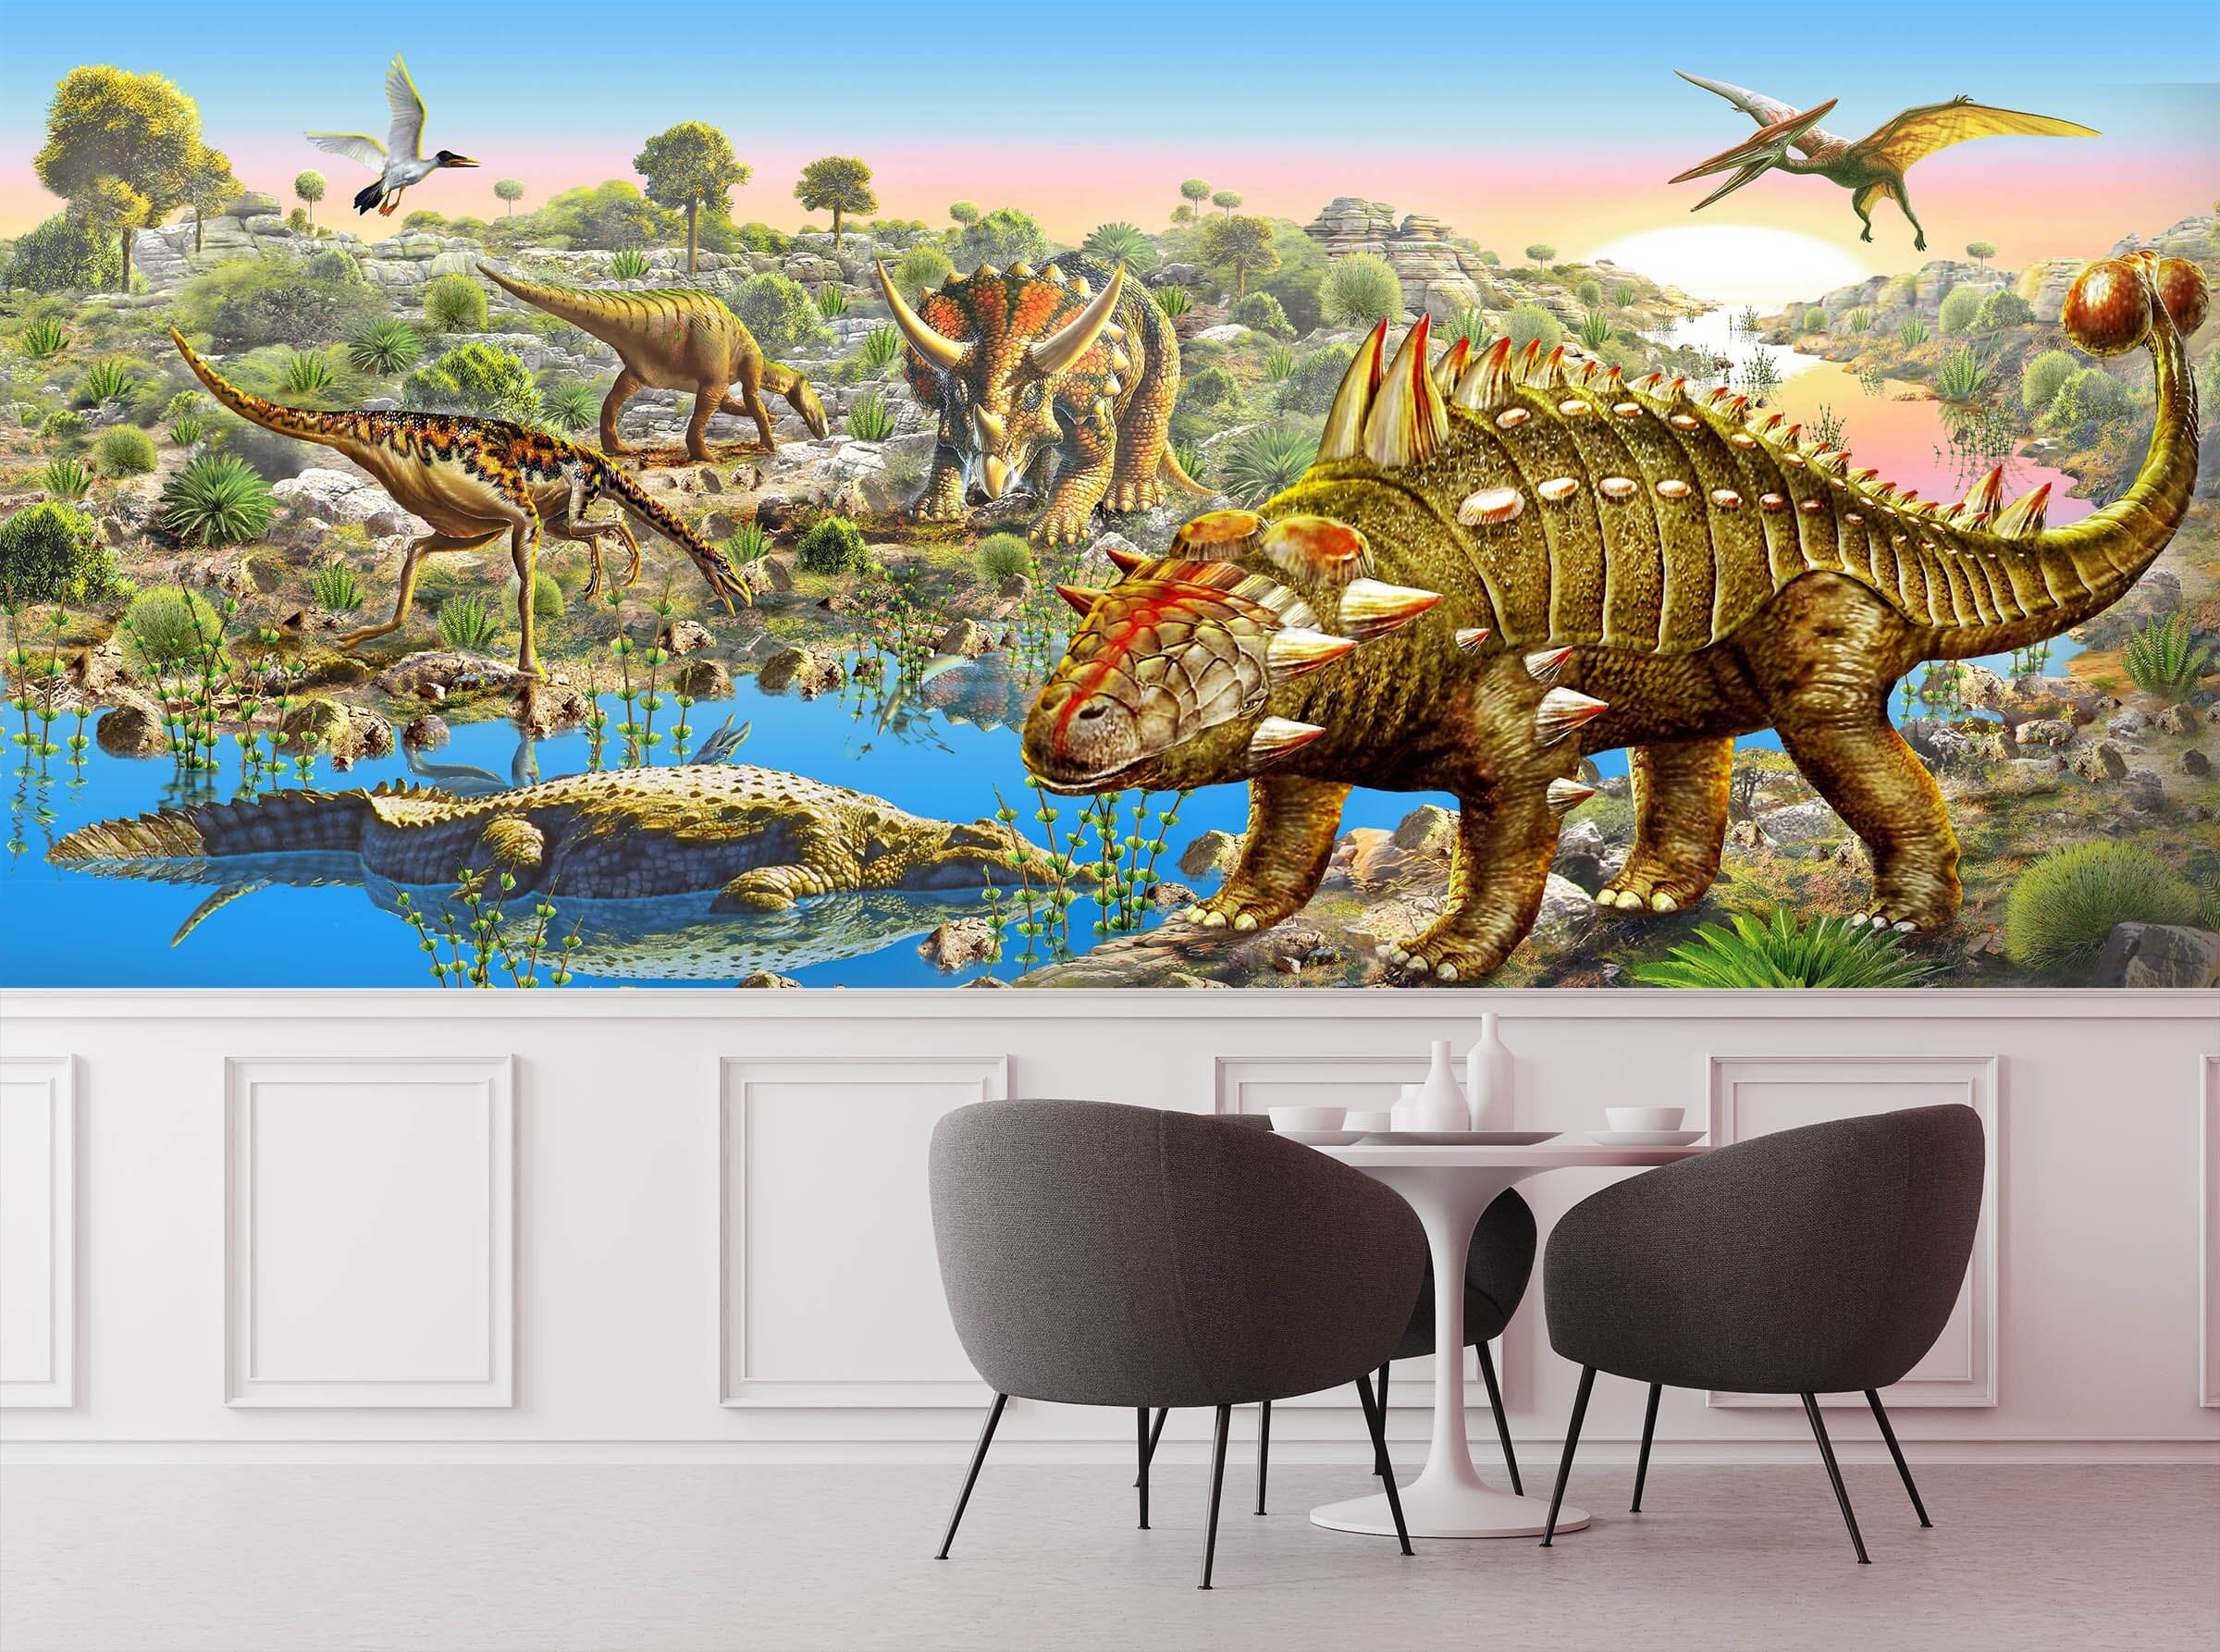 3D Dinosaur 1402 Adrian Chesterman Wall Mural Wall Murals Wallpaper AJ Wallpaper 2 